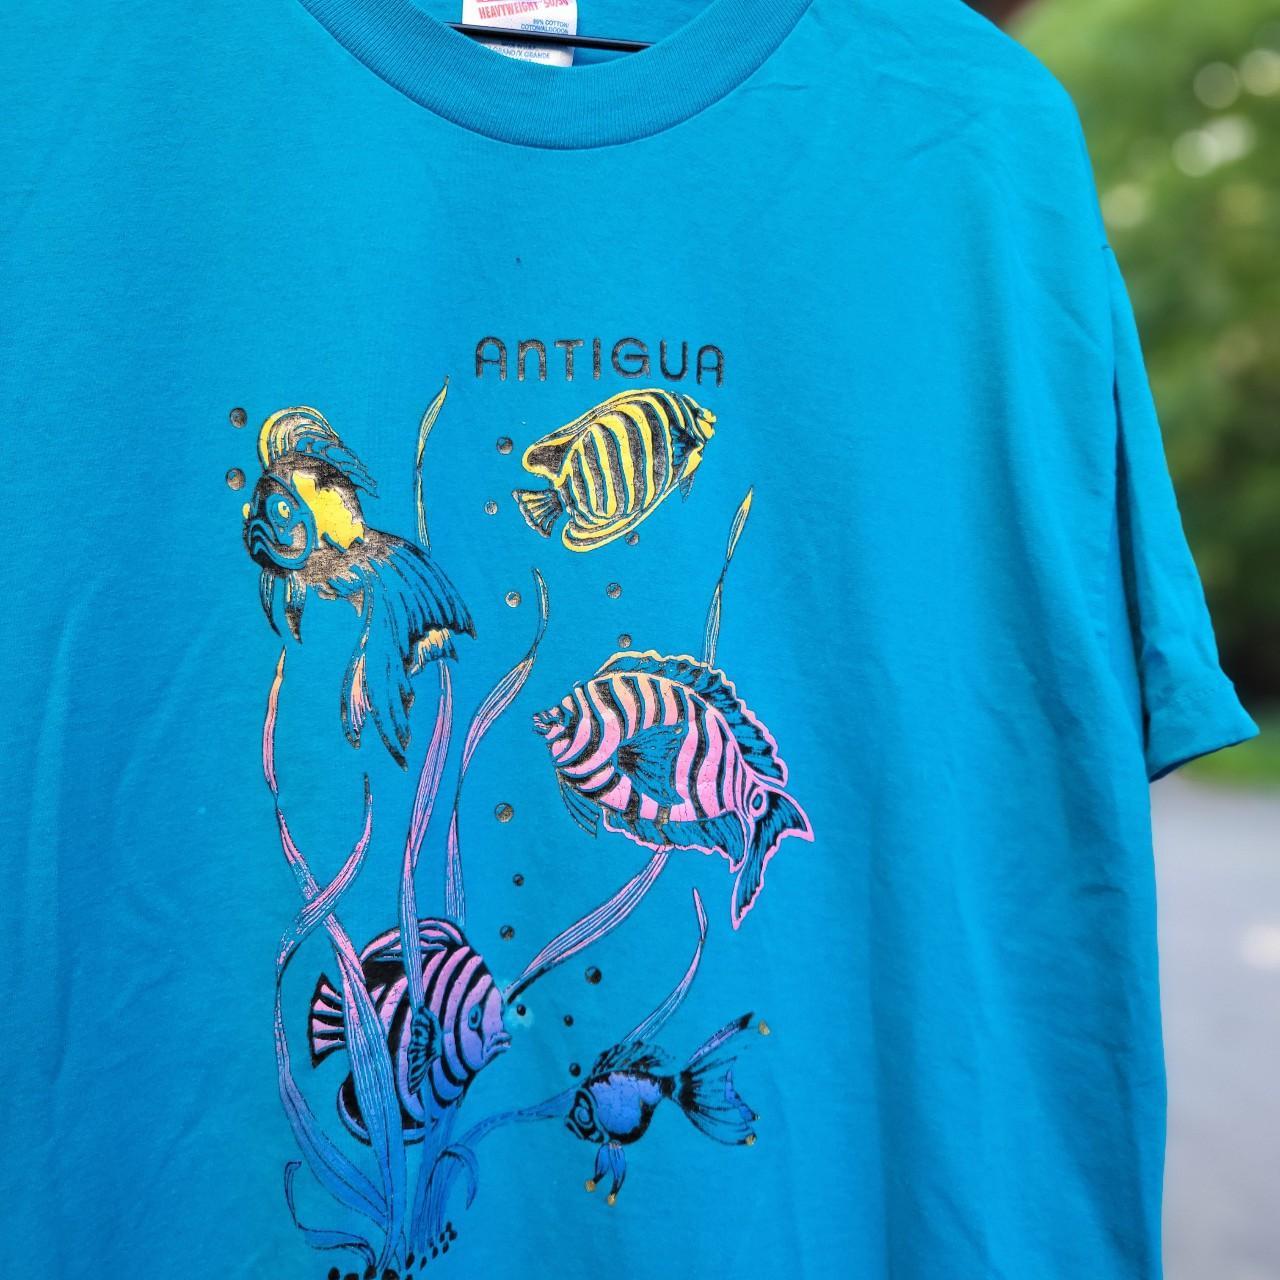 Vintage 90s Fish colorful t shirt. Antigua island - Depop